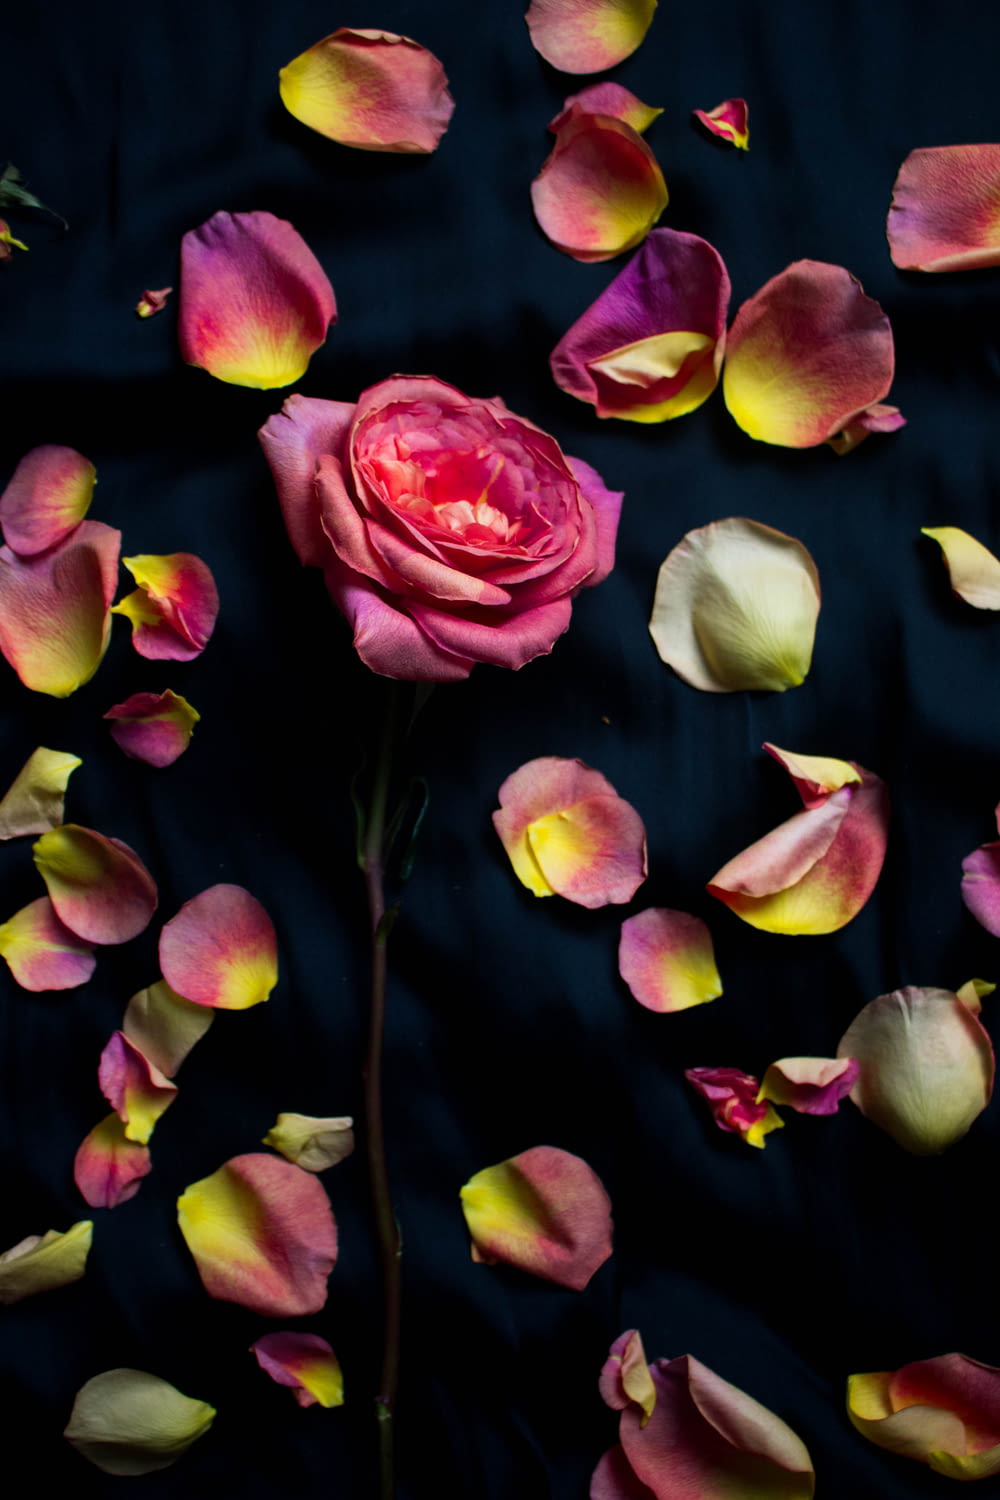 foto ravvicinata di petali rosa